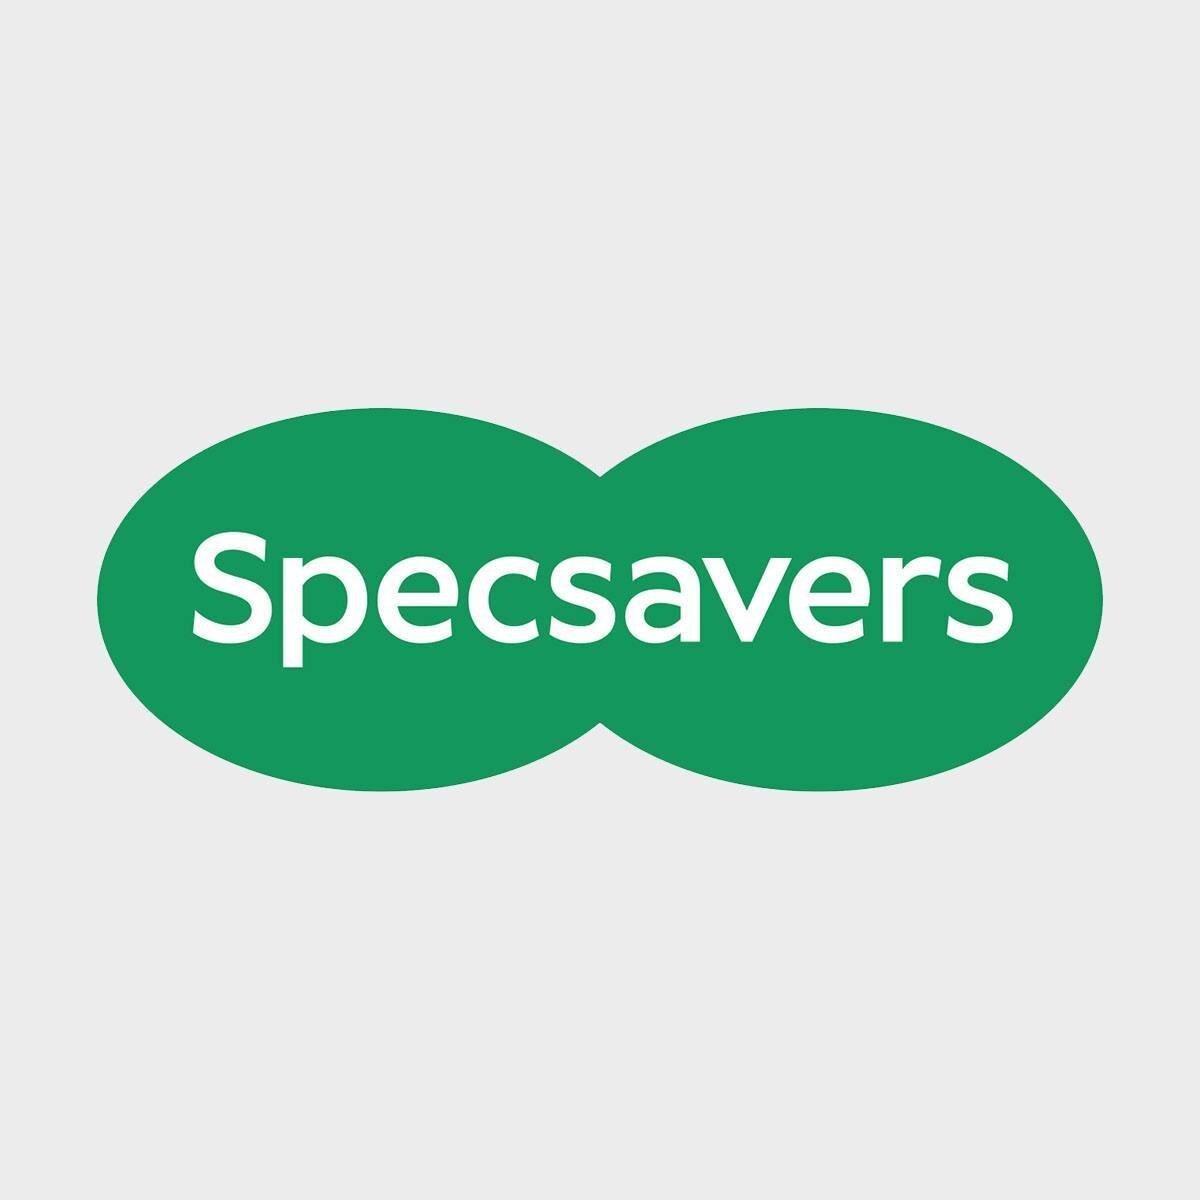 specsavers logo.jpg